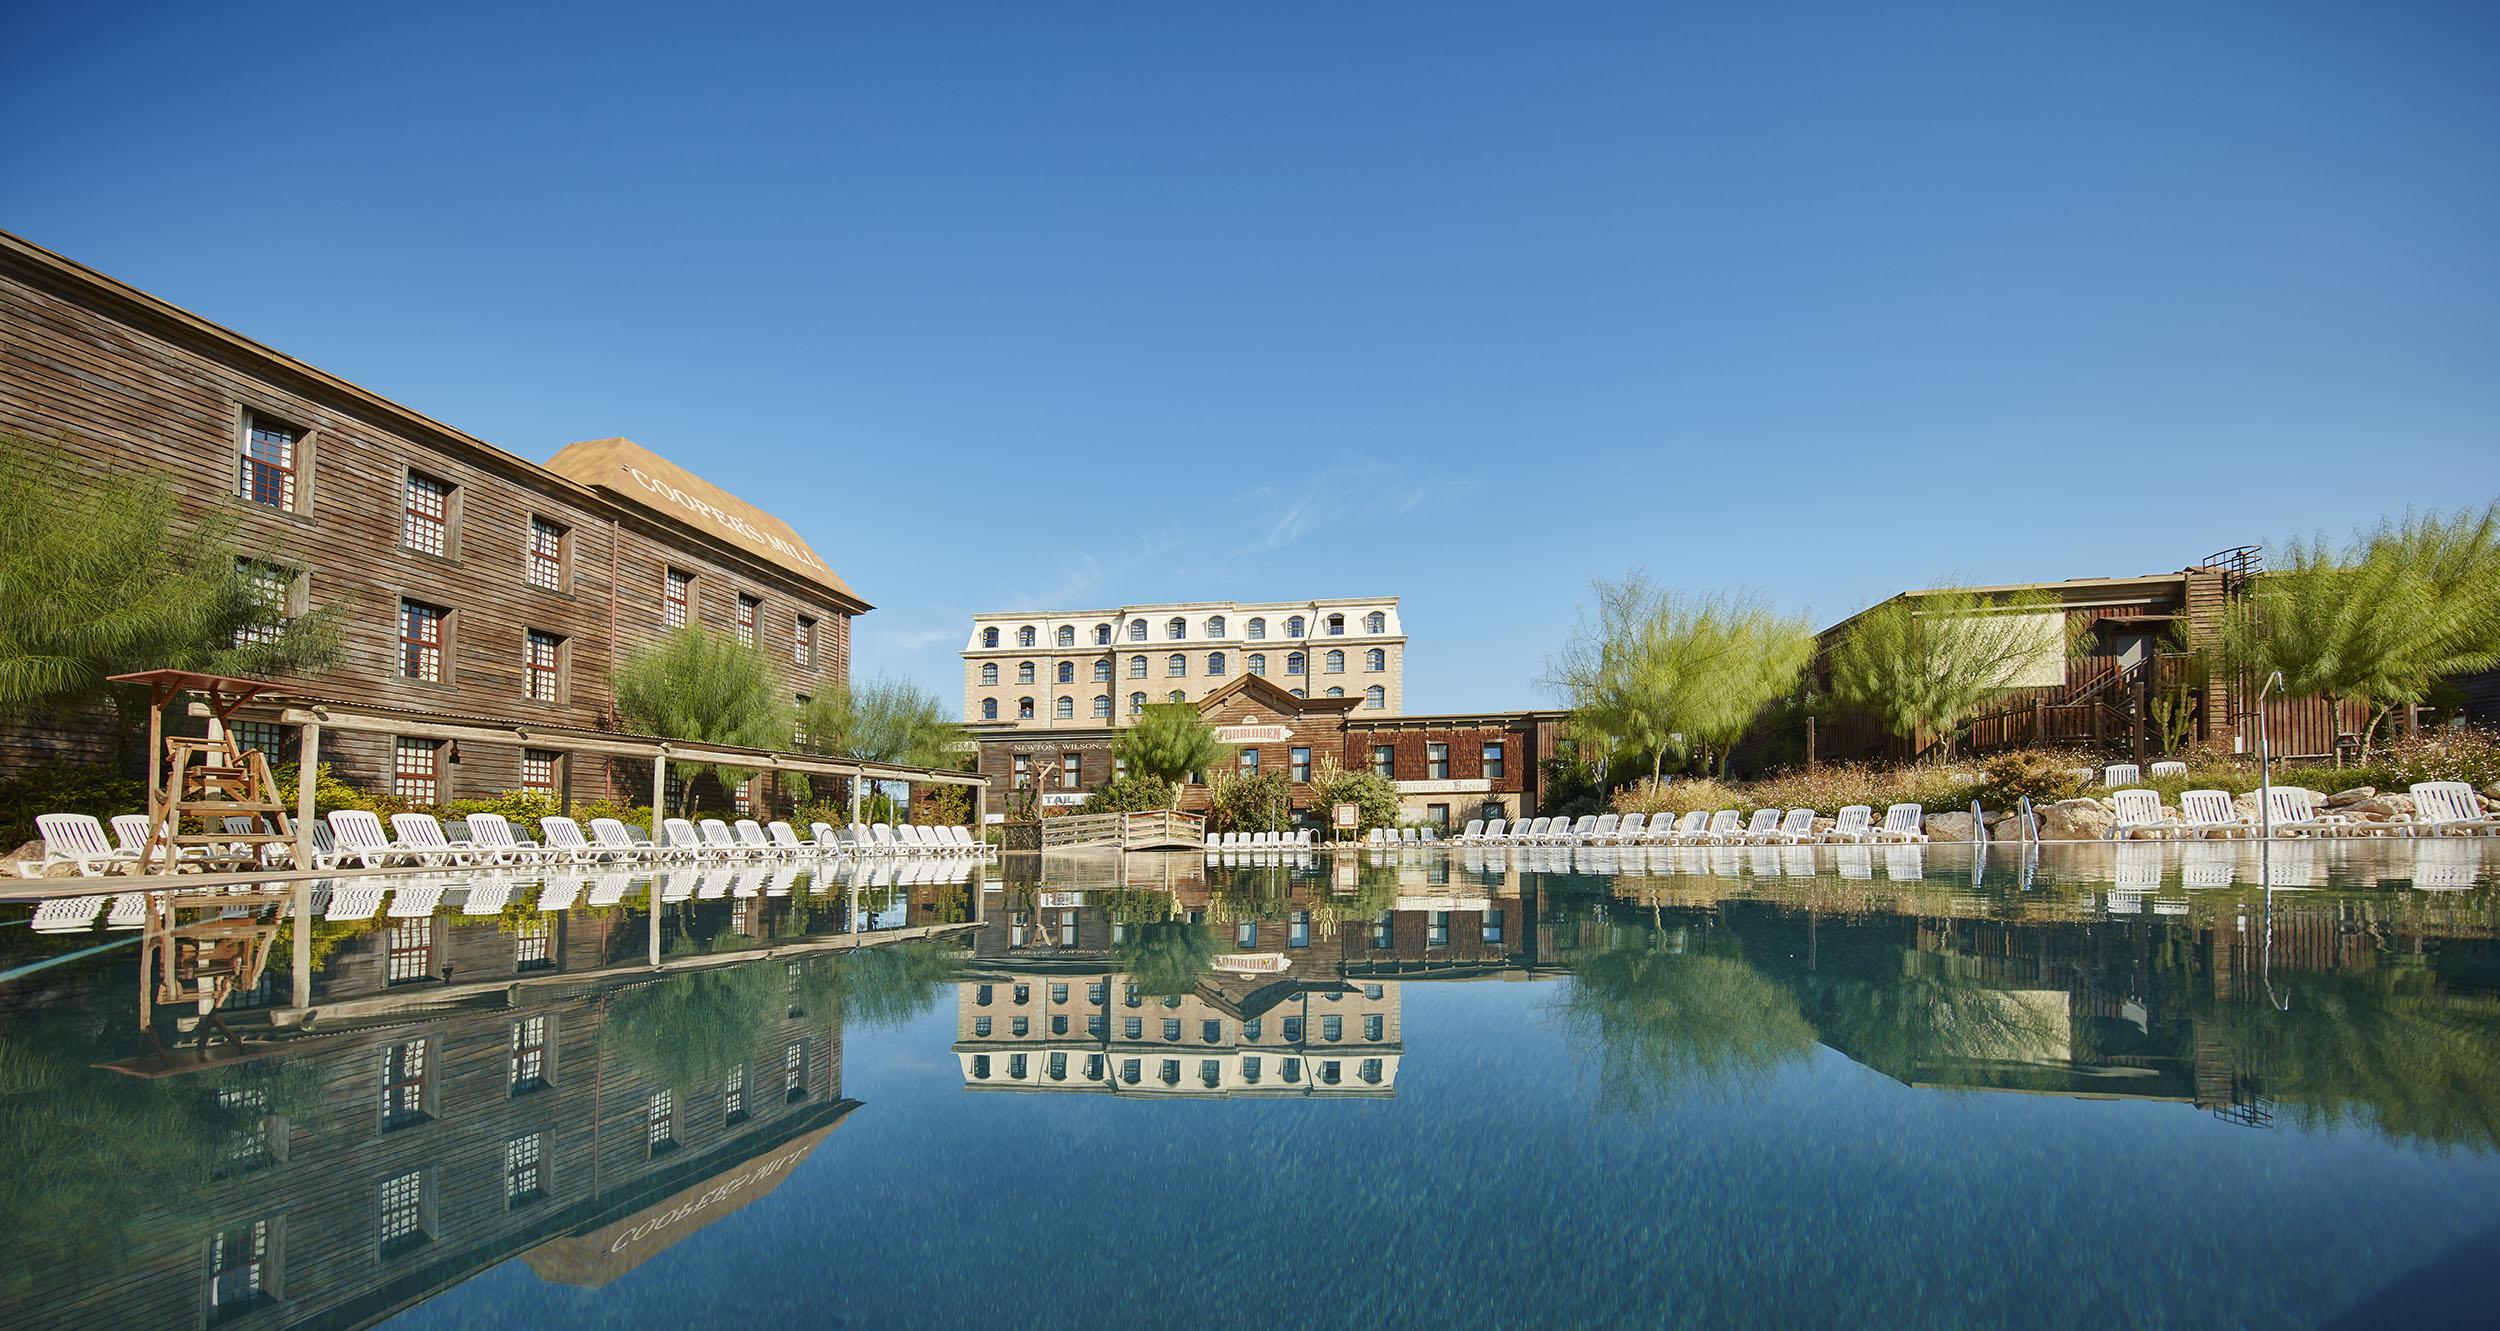 Portaventura Hotel Gold River - Includes Portaventura Park Tickets 살루 외부 사진